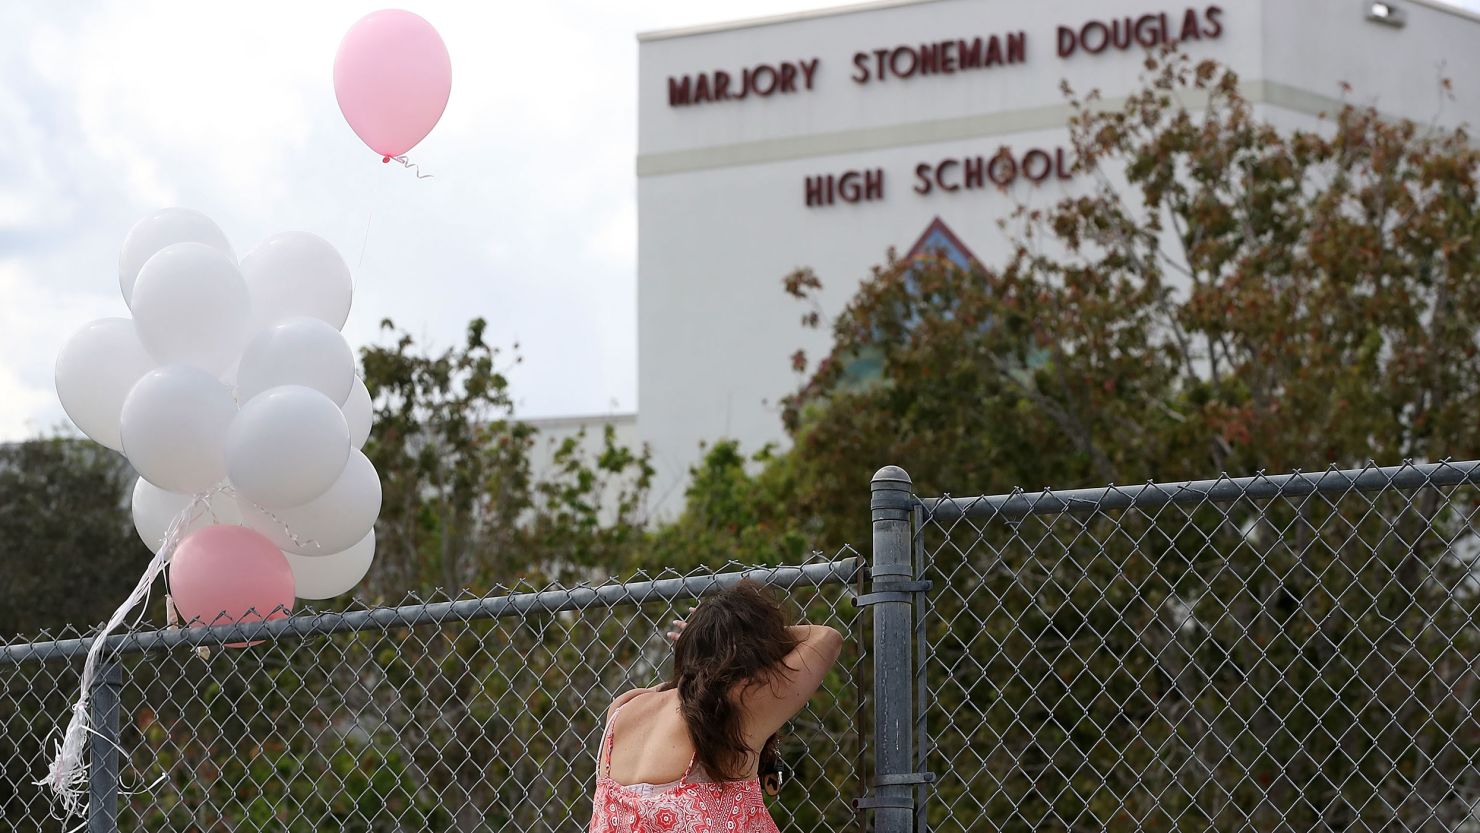 Marjory Stoneman Douglas High School on February 18, 2018 in Parkland, Florida. 